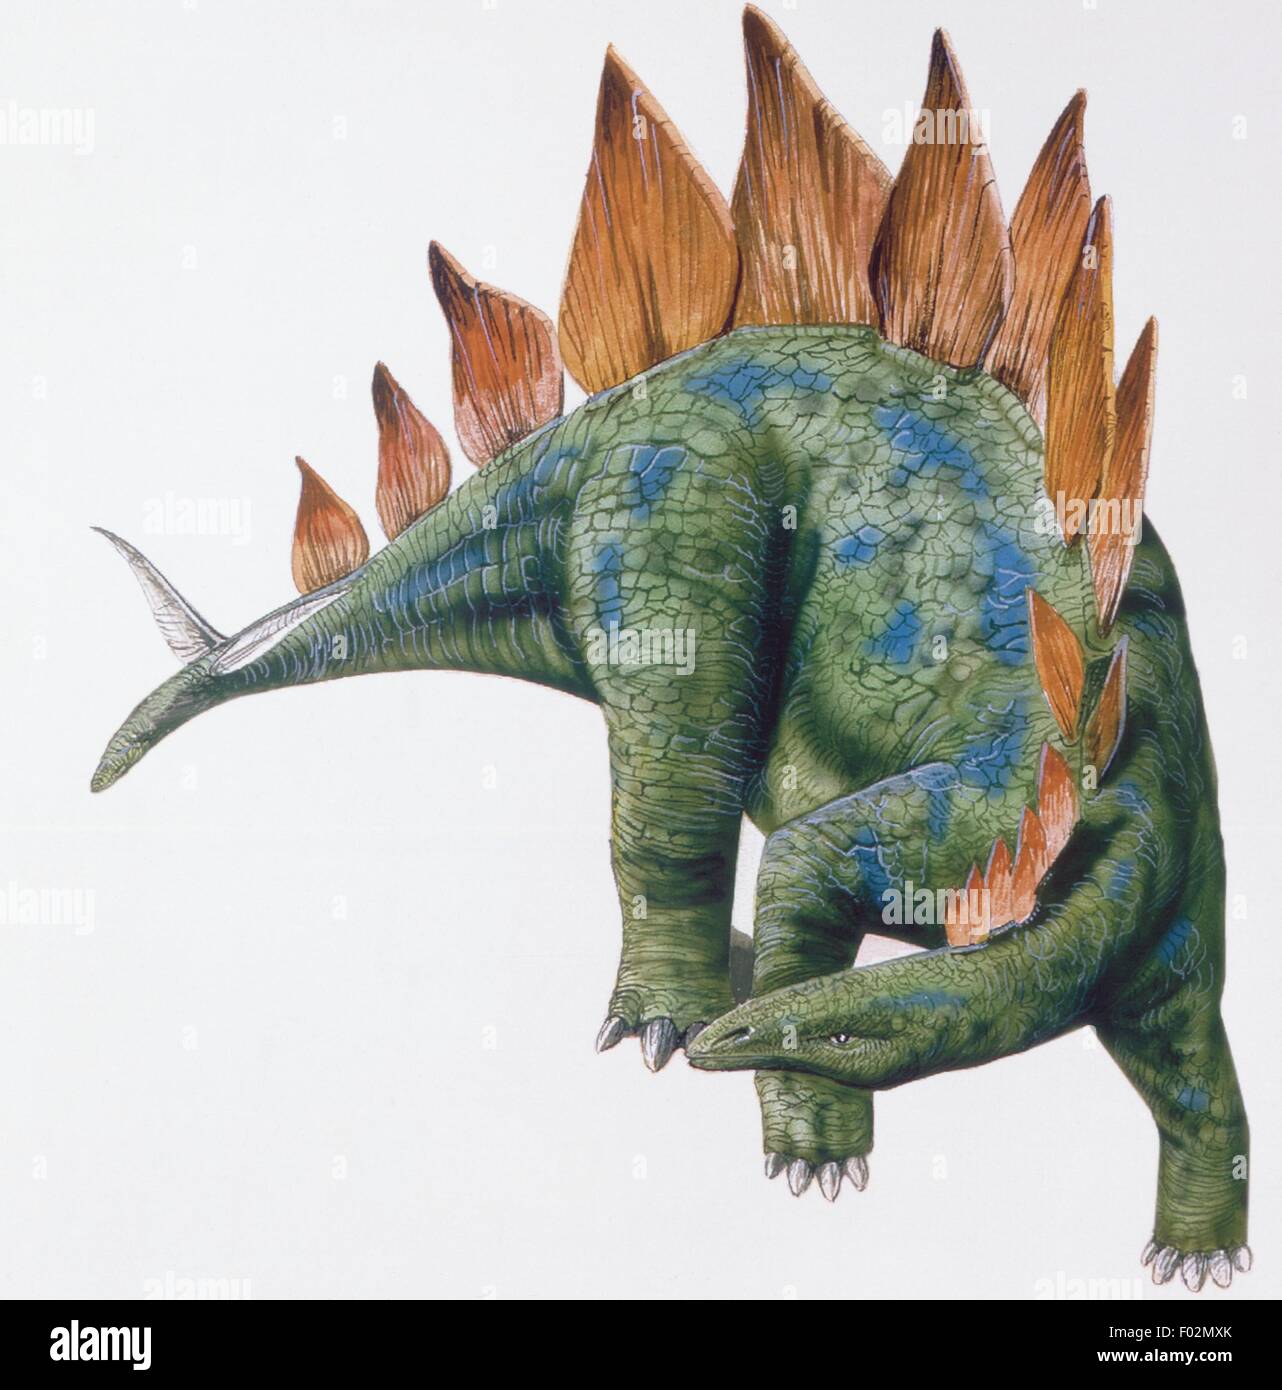 Palaeozoology - Upper Jurassic period - Dinosaurs - Stegosaurus - Art work Stock Photo